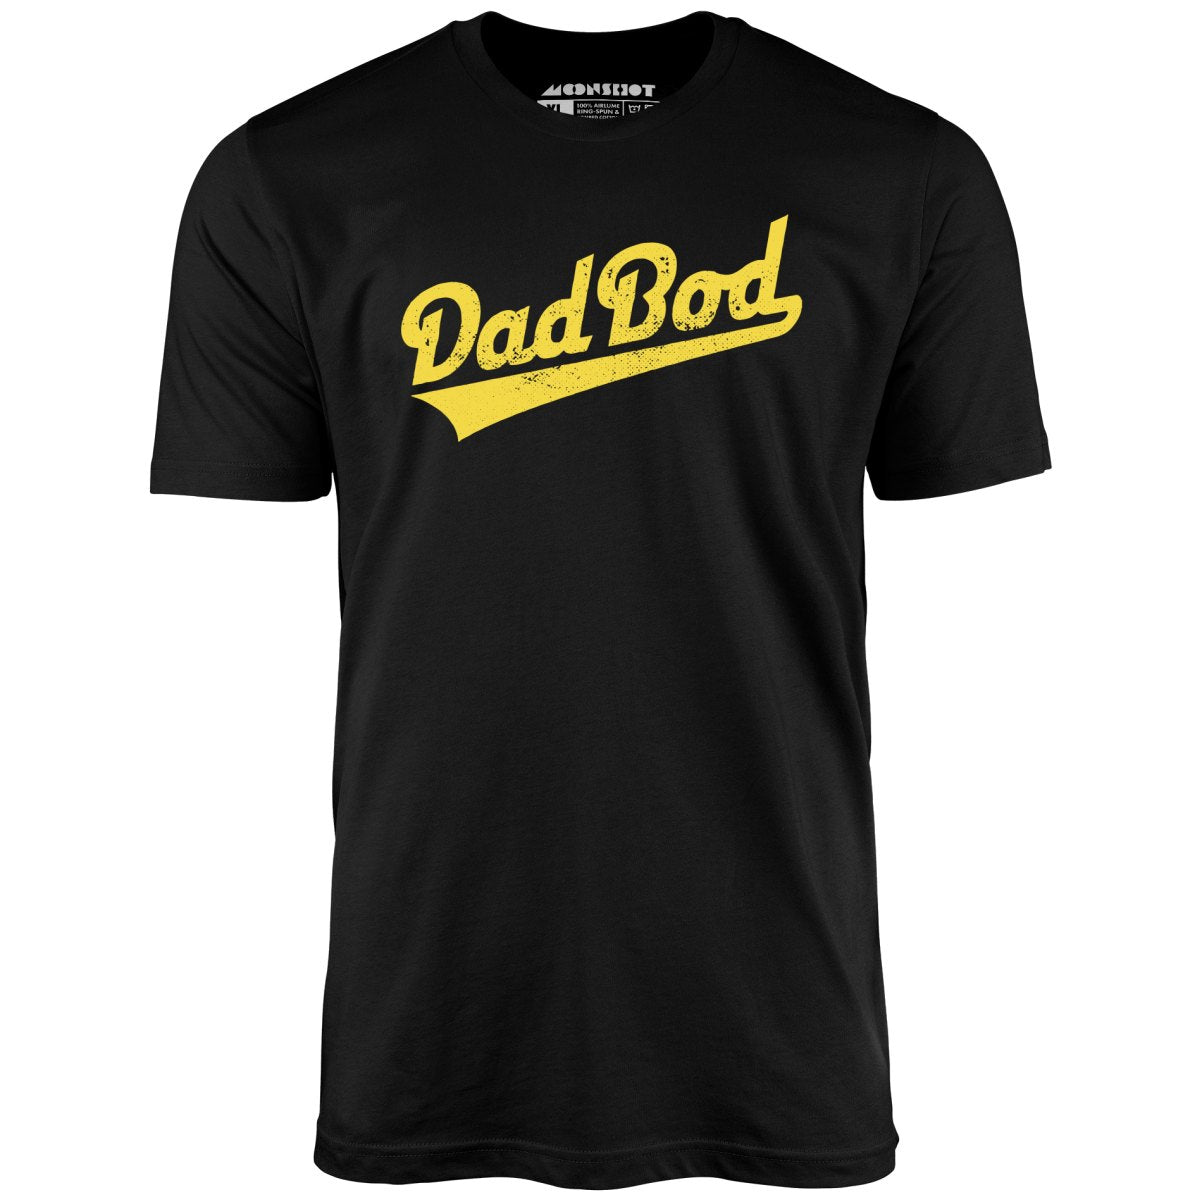 Dad Bod - Unisex T-Shirt